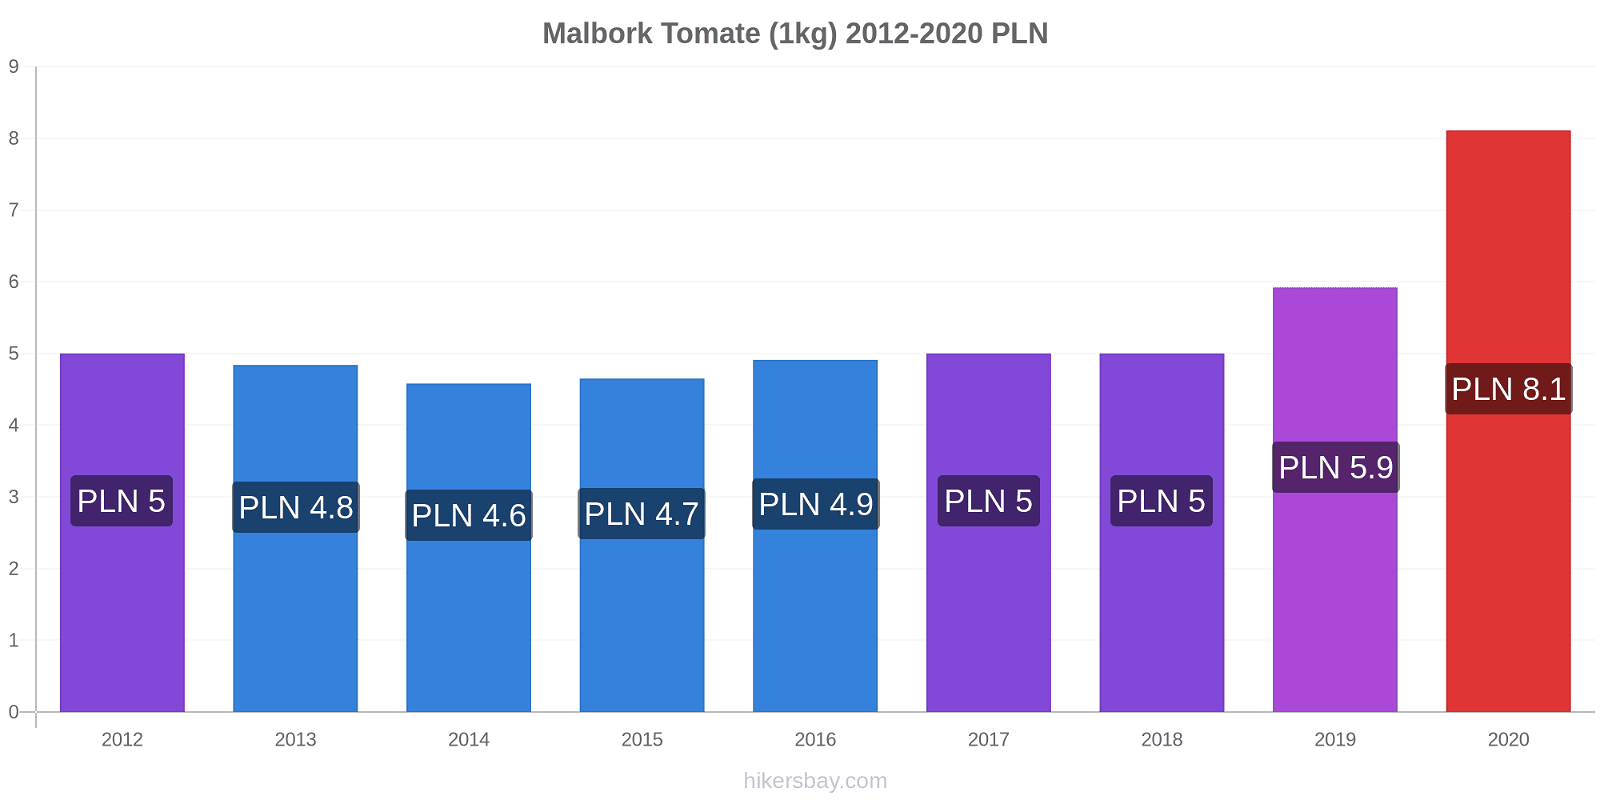 Malbork changements de prix Tomate (1kg) hikersbay.com